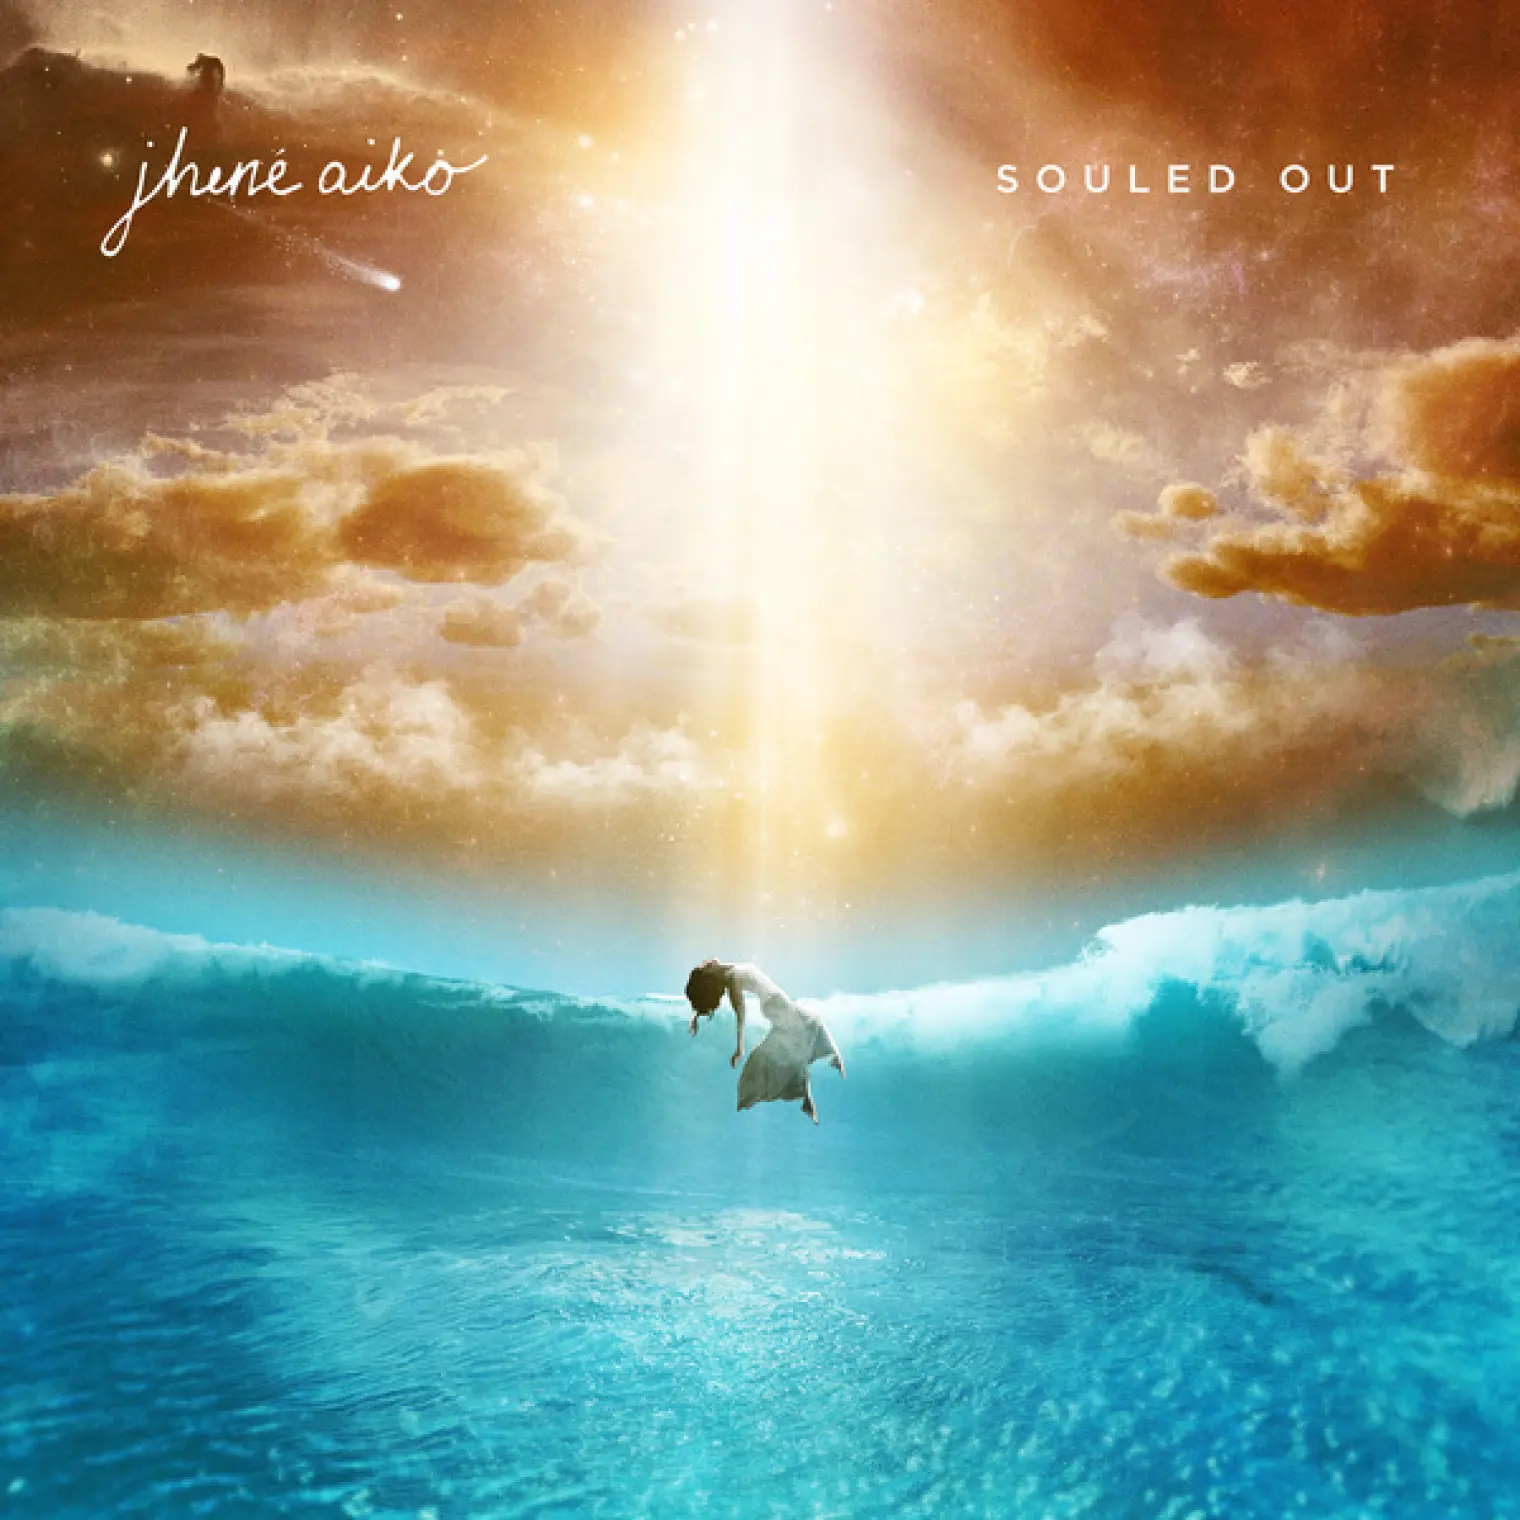 Souled Out -  Jhené Aiko 